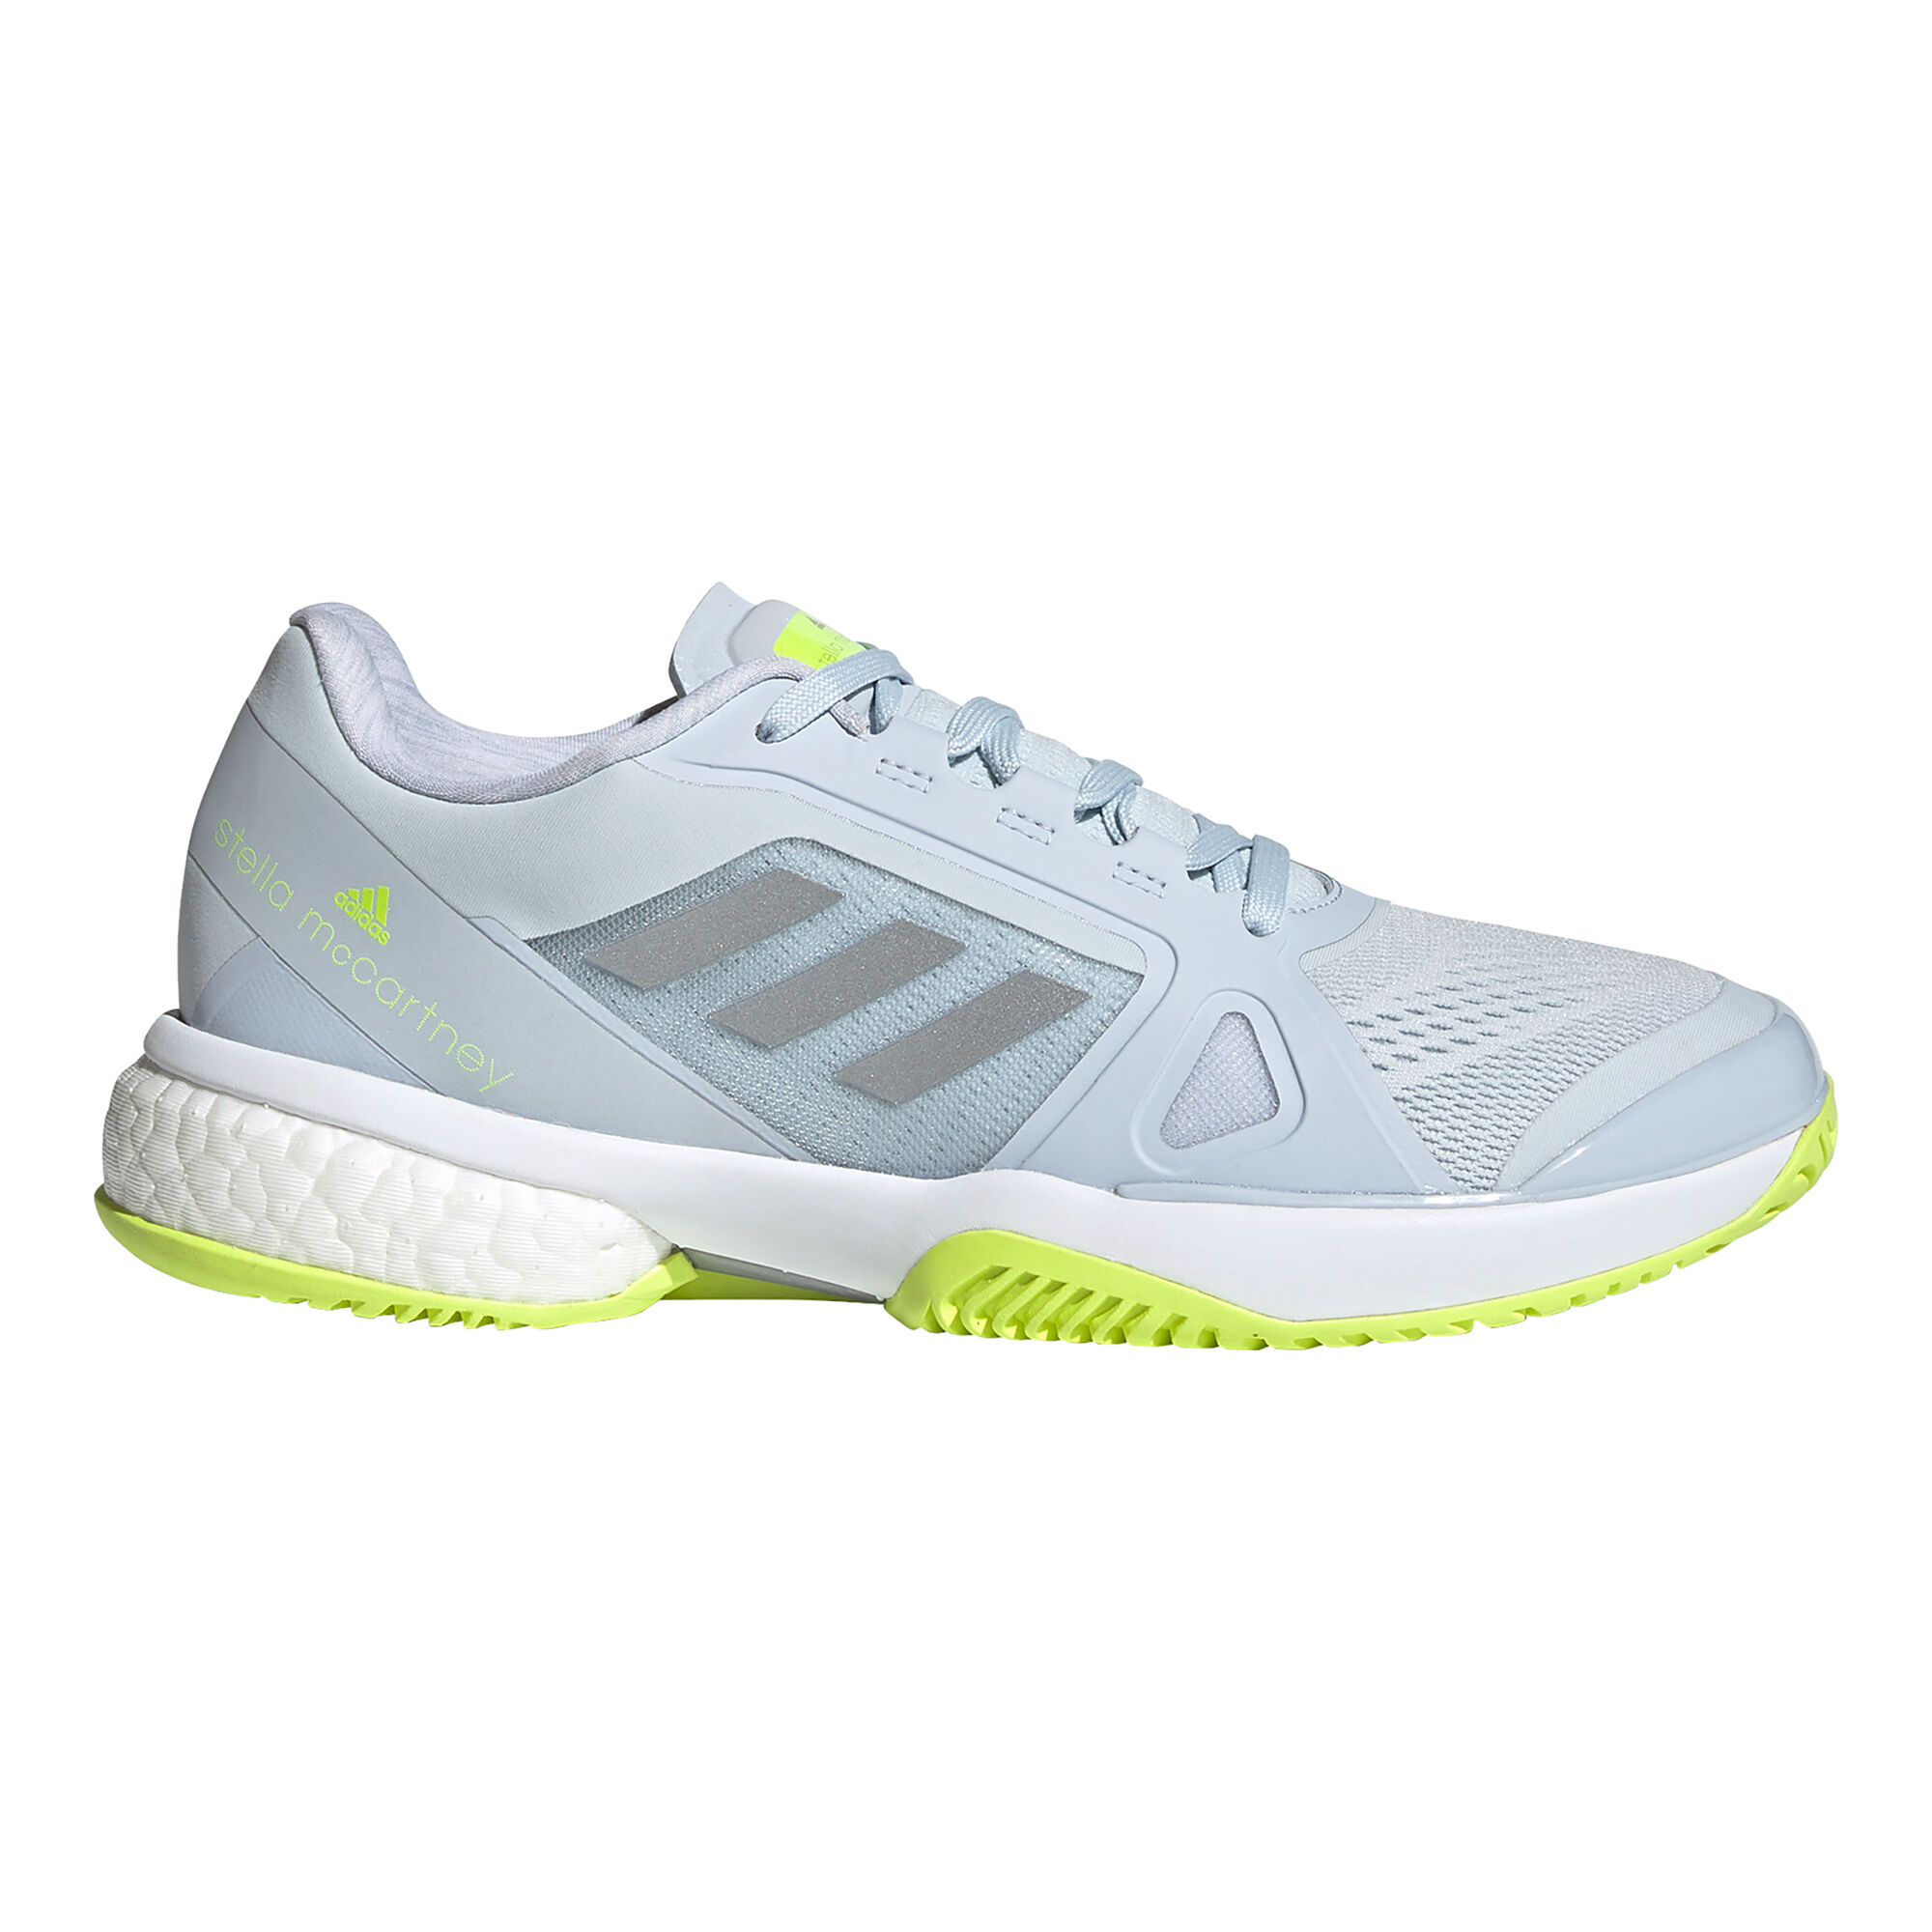 domæne Devise ligegyldighed buy adidas Stella McCartney Tennis All Court Shoe Women - Light Blue, Lime  online | Tennis-Point